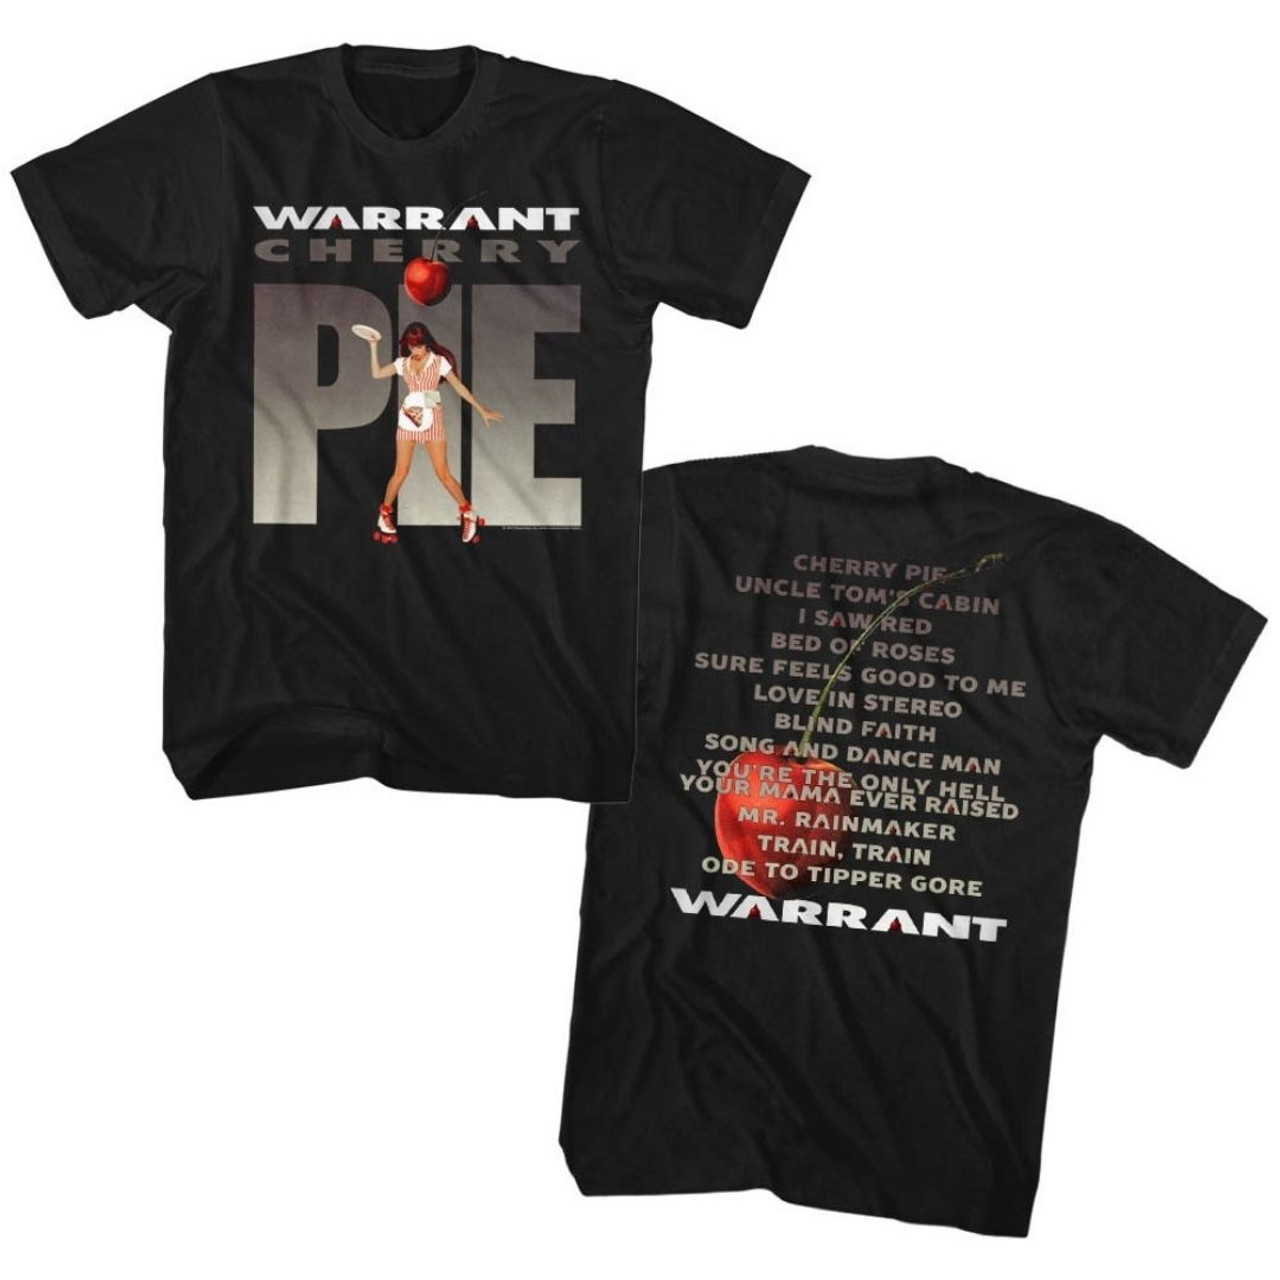 Warrant Rock Band Fashion T-shirt - Cherry Pie Album Cover Artwork with  Song Titles. Men's Unisex Black Shirt